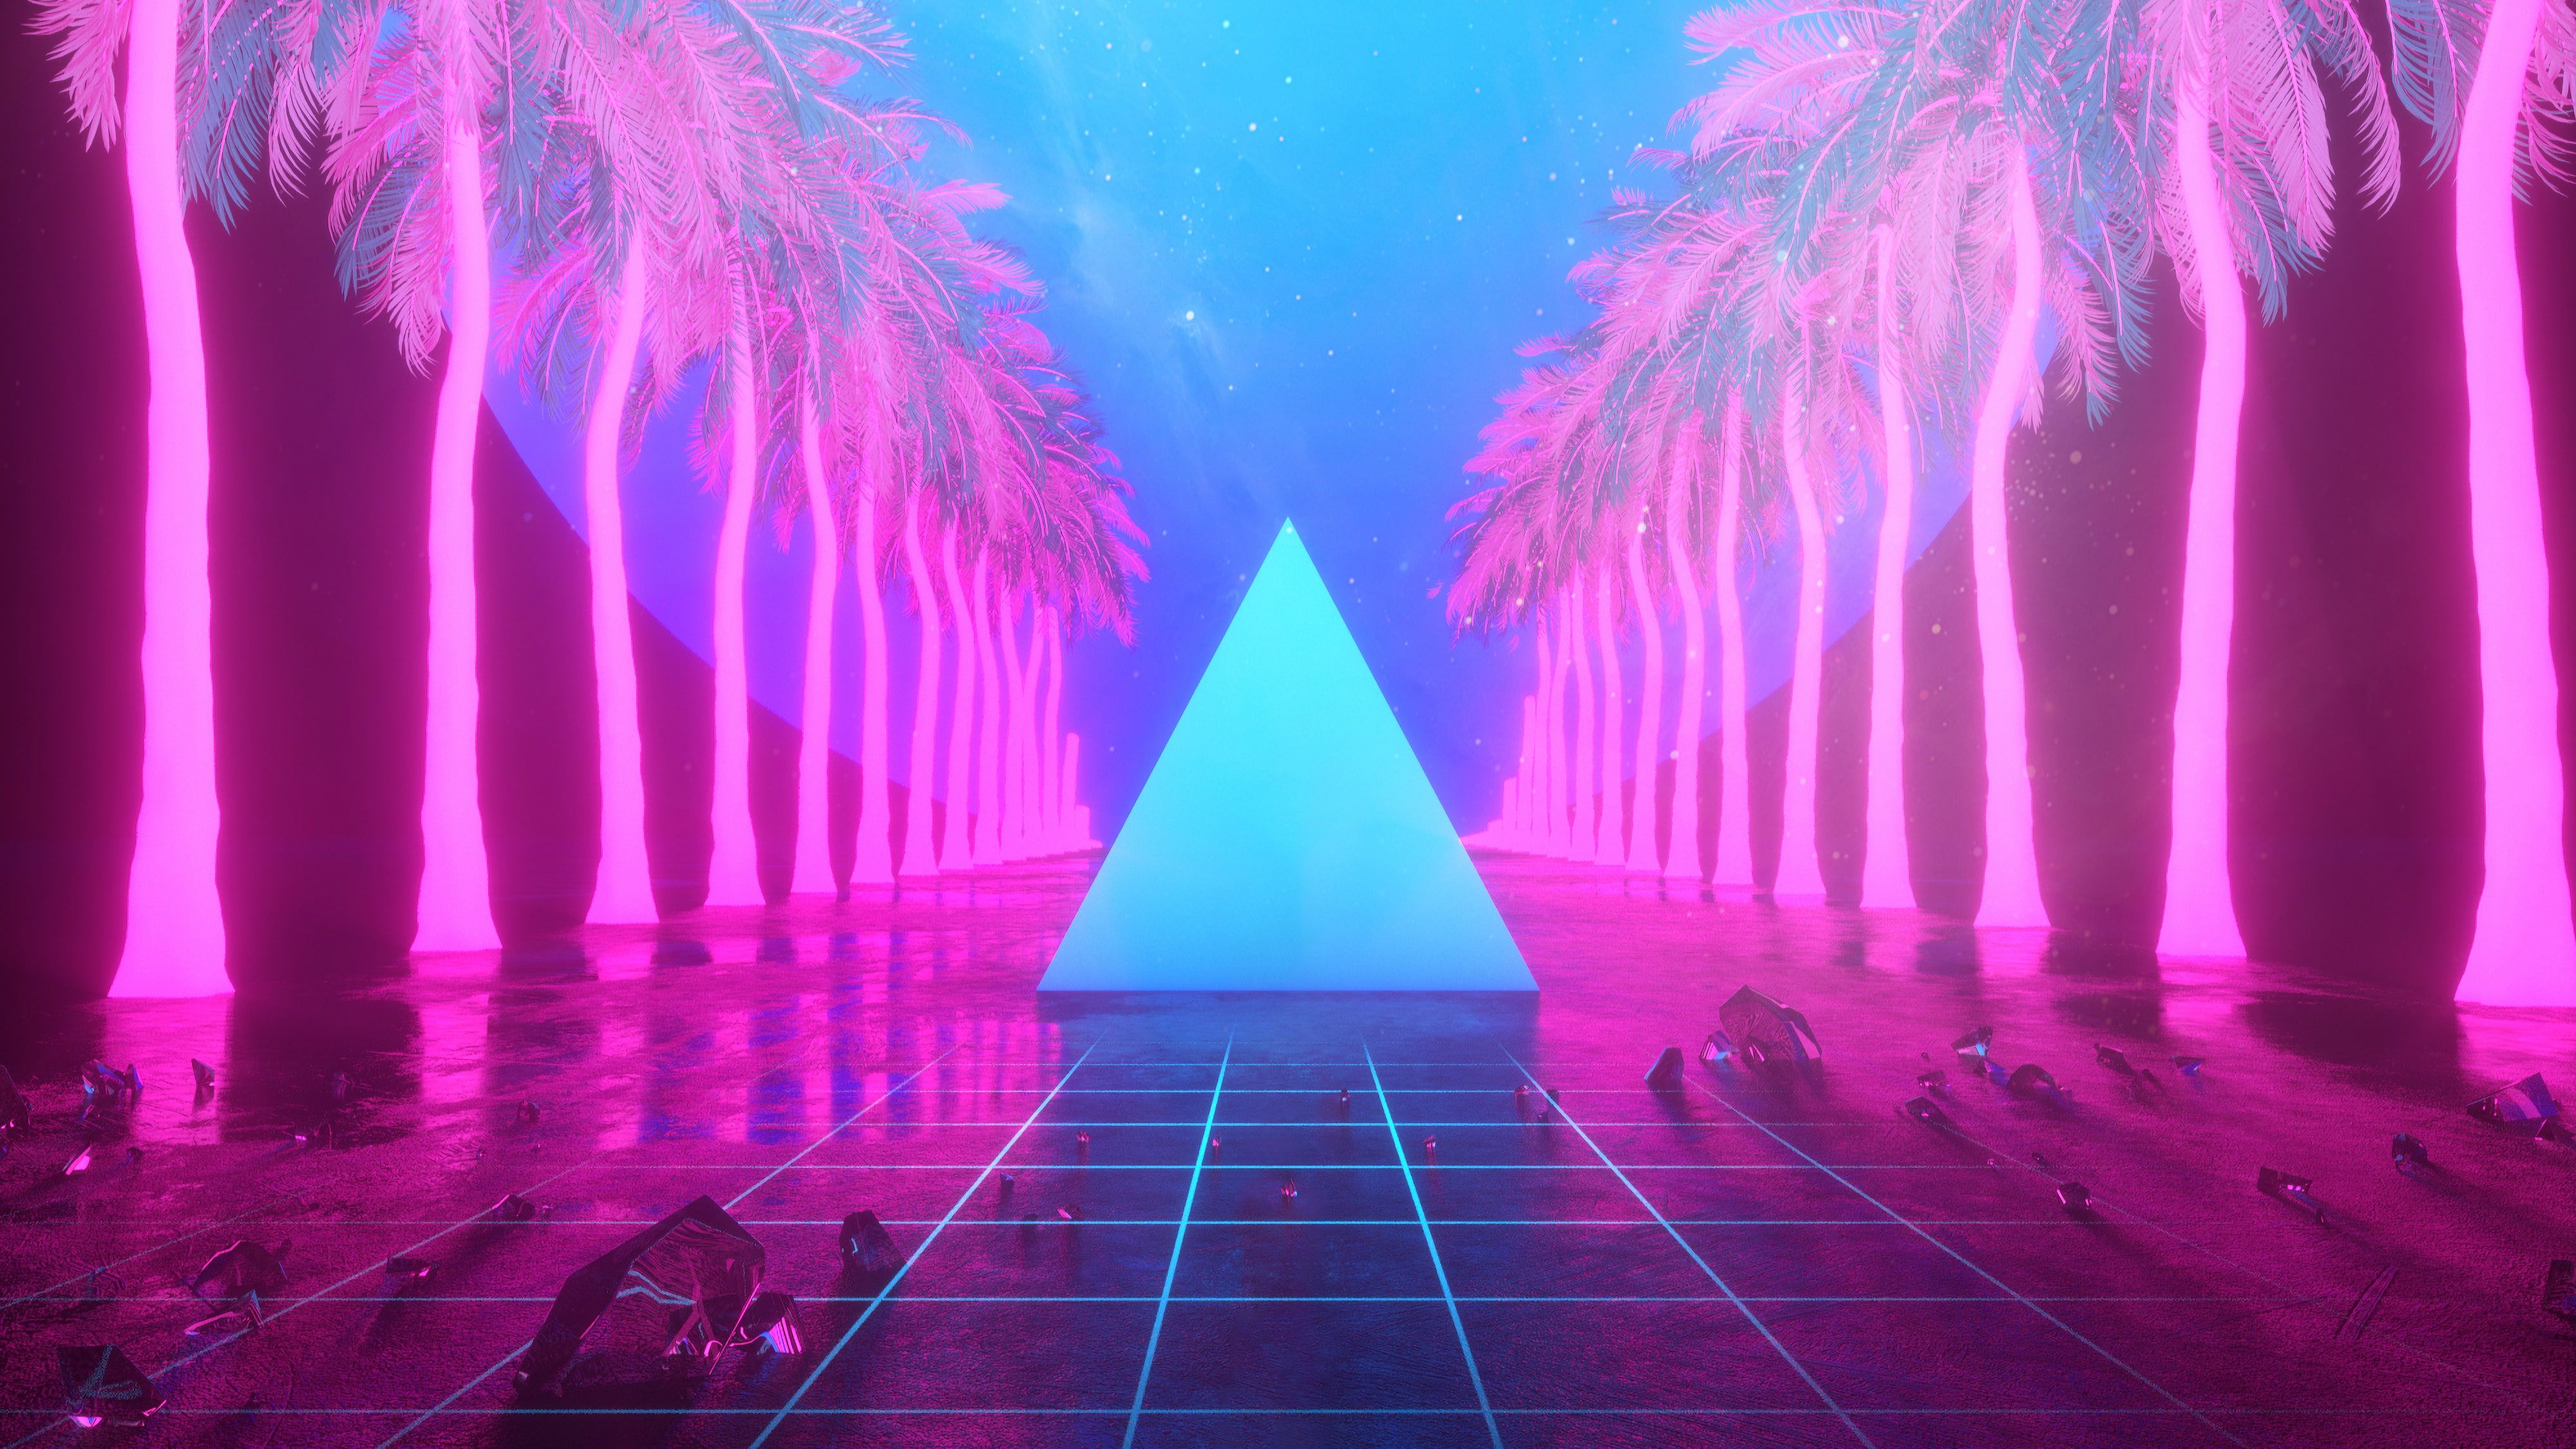 Retro Style #vaporwave #abstract Palm Trees #pyramid Post Post Modernism #reflection #stars K #wallpa. Electronics Wallpaper, Palm Trees Wallpaper, Neon Artwork